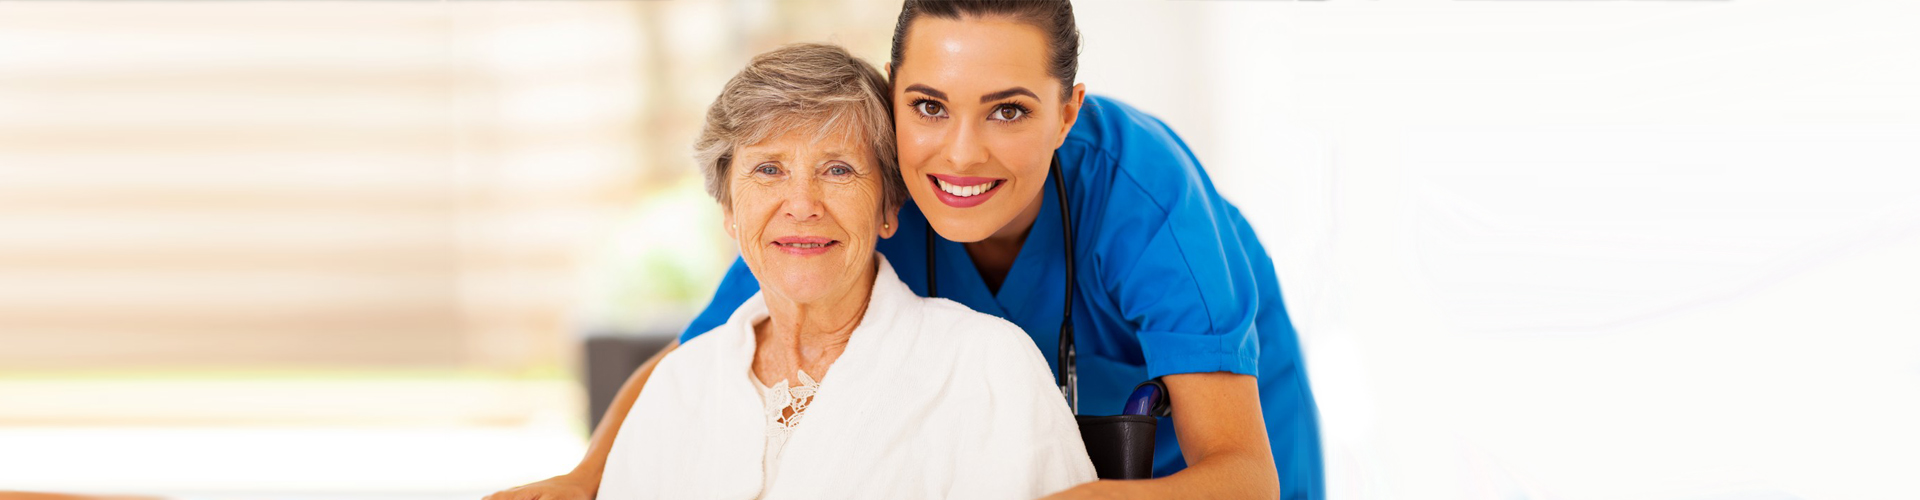 a nurse and a senior woman smiling